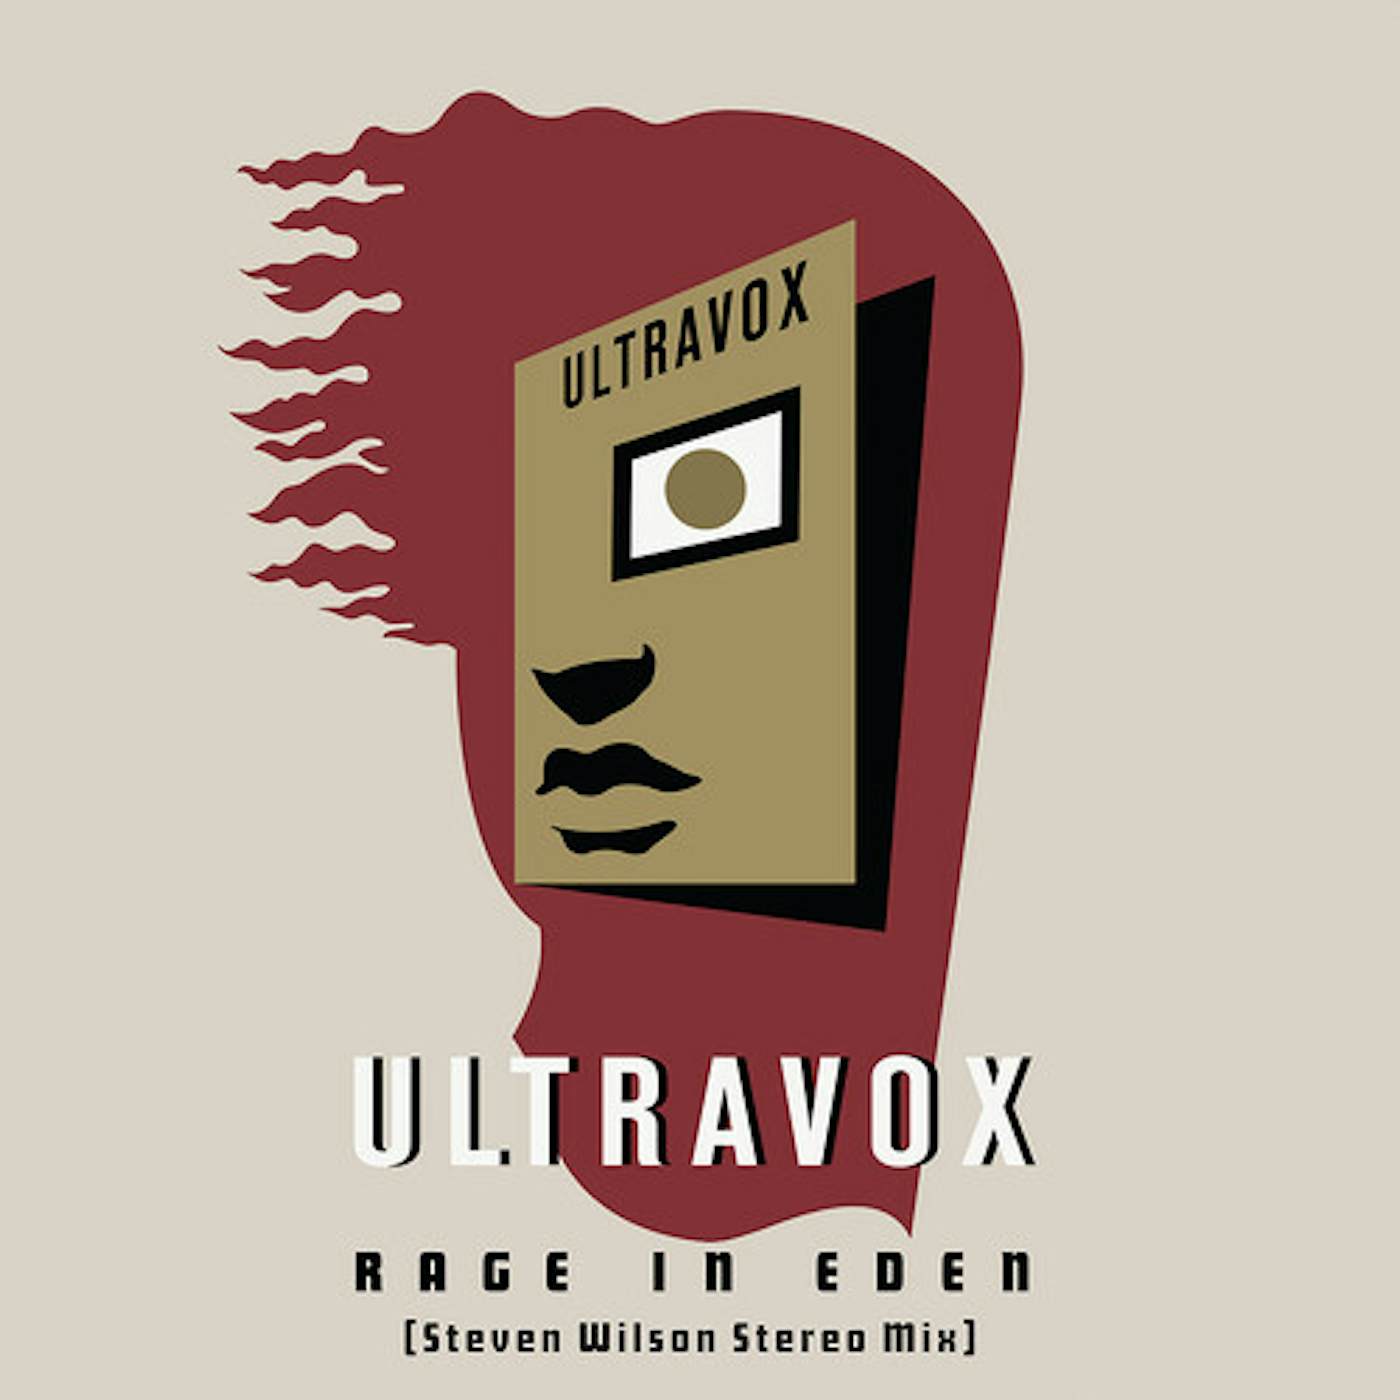 Ultravox RAGE IN EDEN (STEVEN WILSON STEREO MIX) CD